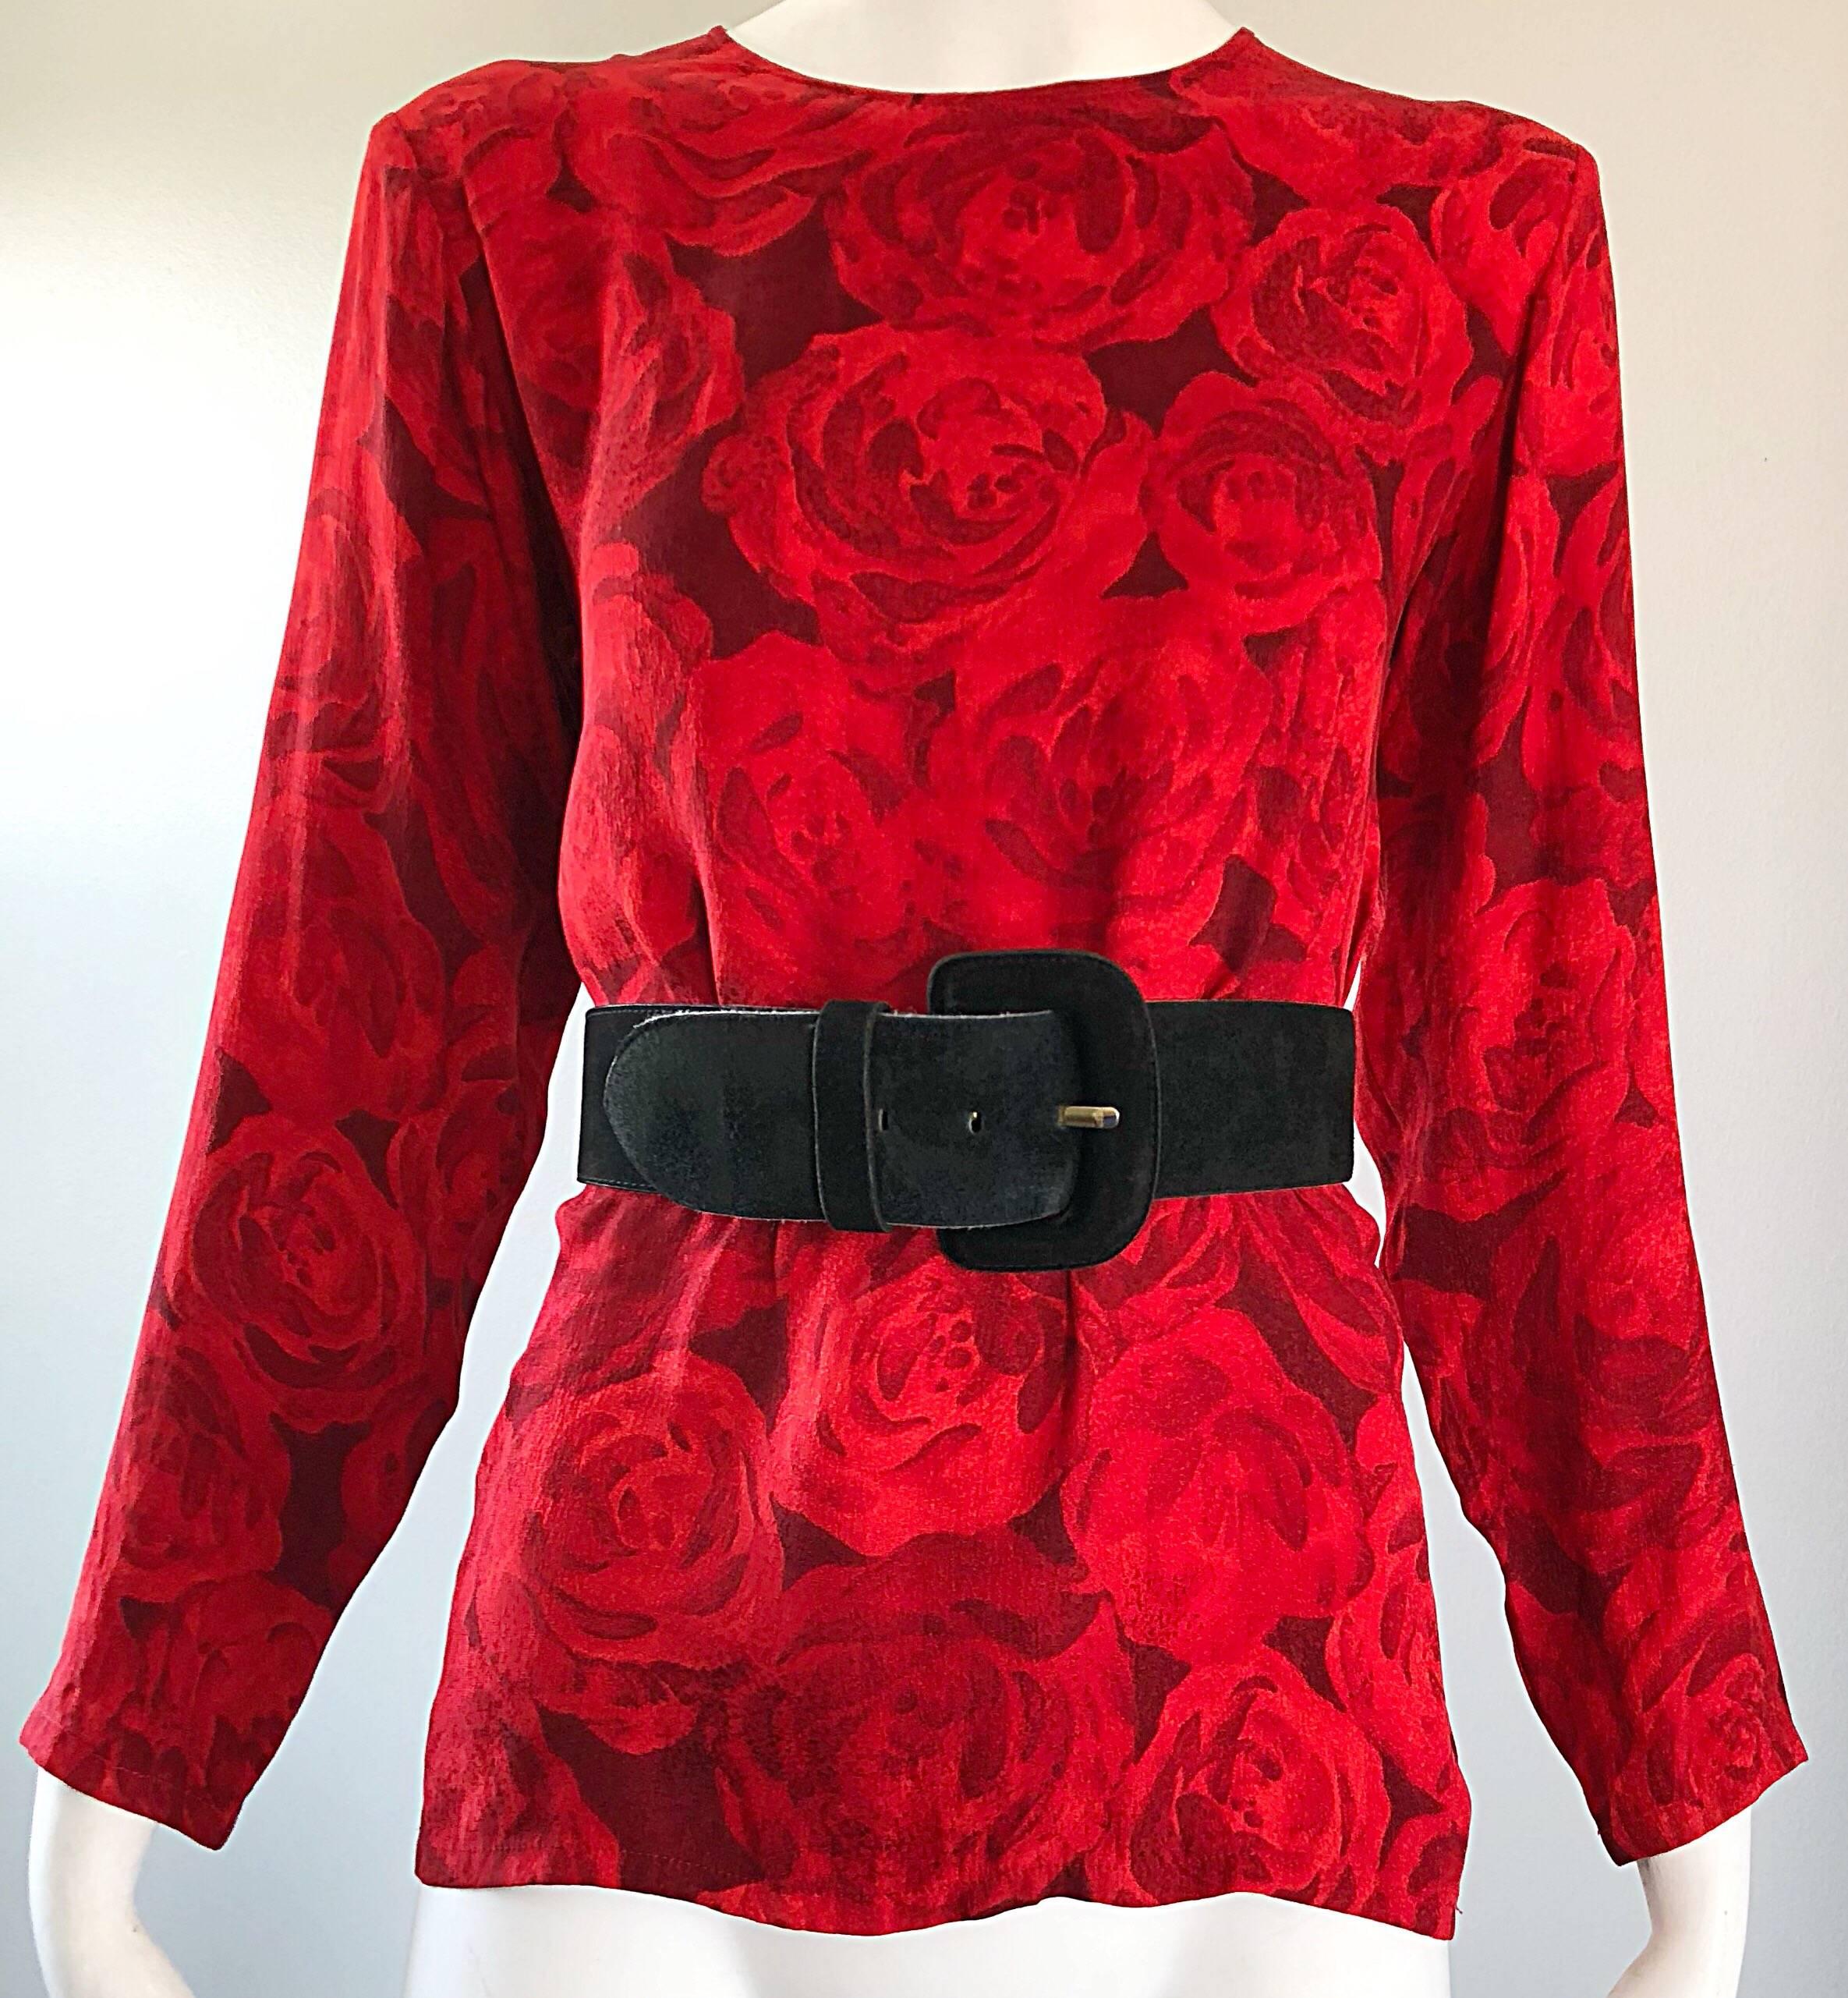 Women's 1990s Yves Saint Laurent Rive Gauche Rose Print Red Silk Vintage 90s Blouse Top